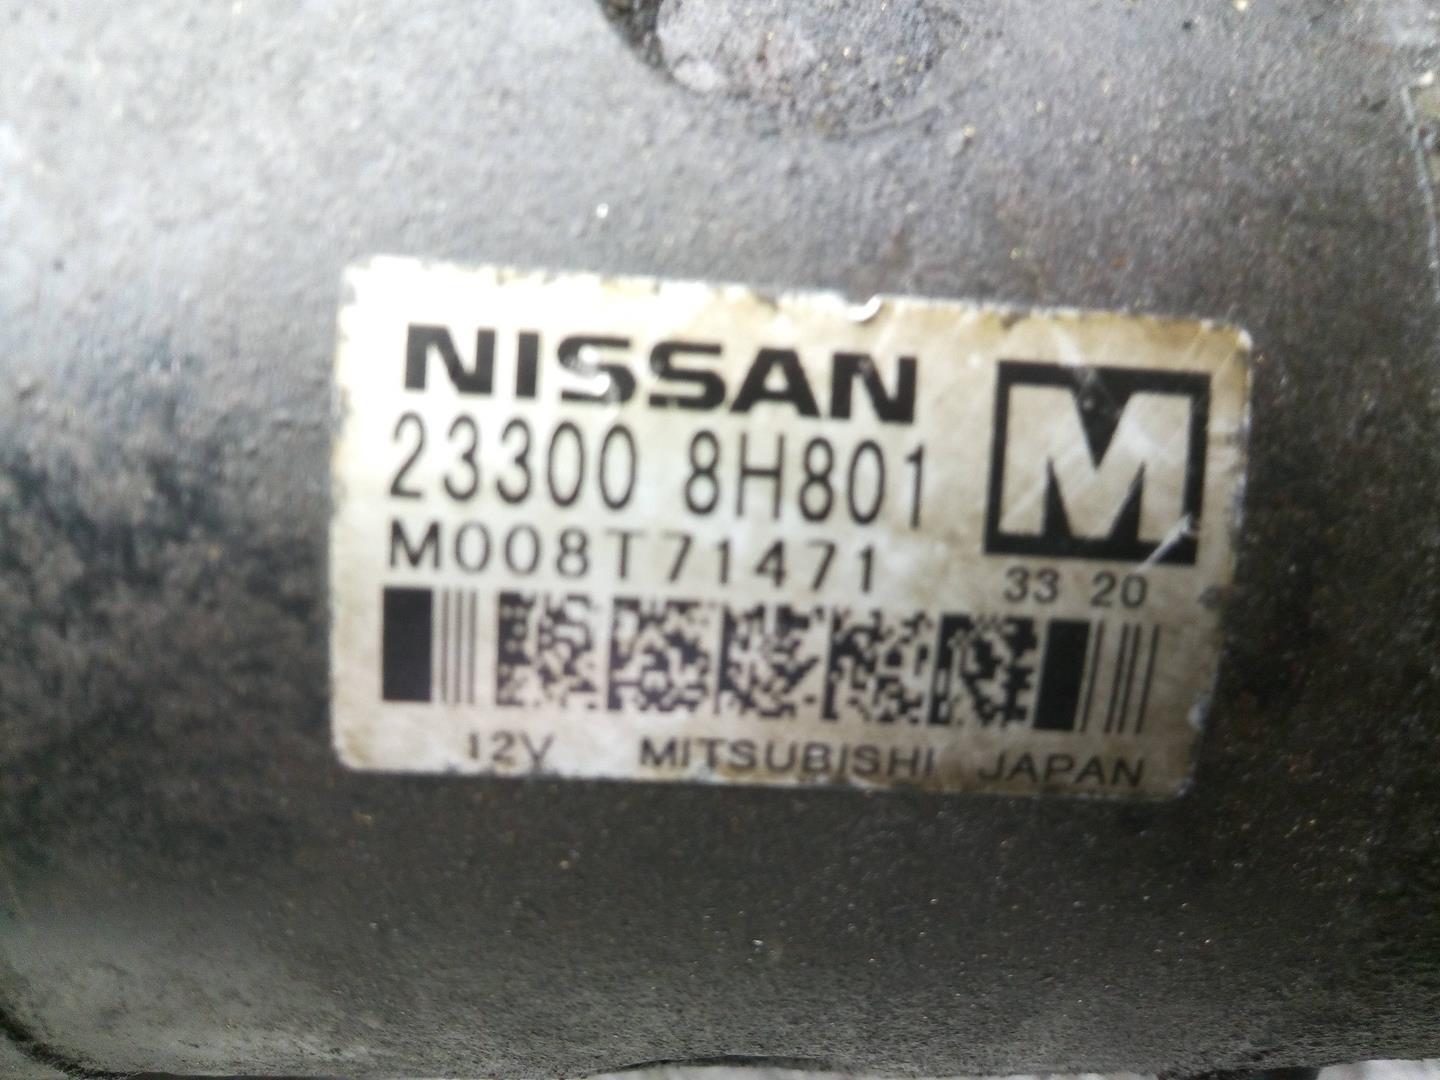 NISSAN Almera Tino 1 generation  (2000-2006) Starter Motor 233008H801, M008T71471 18532107